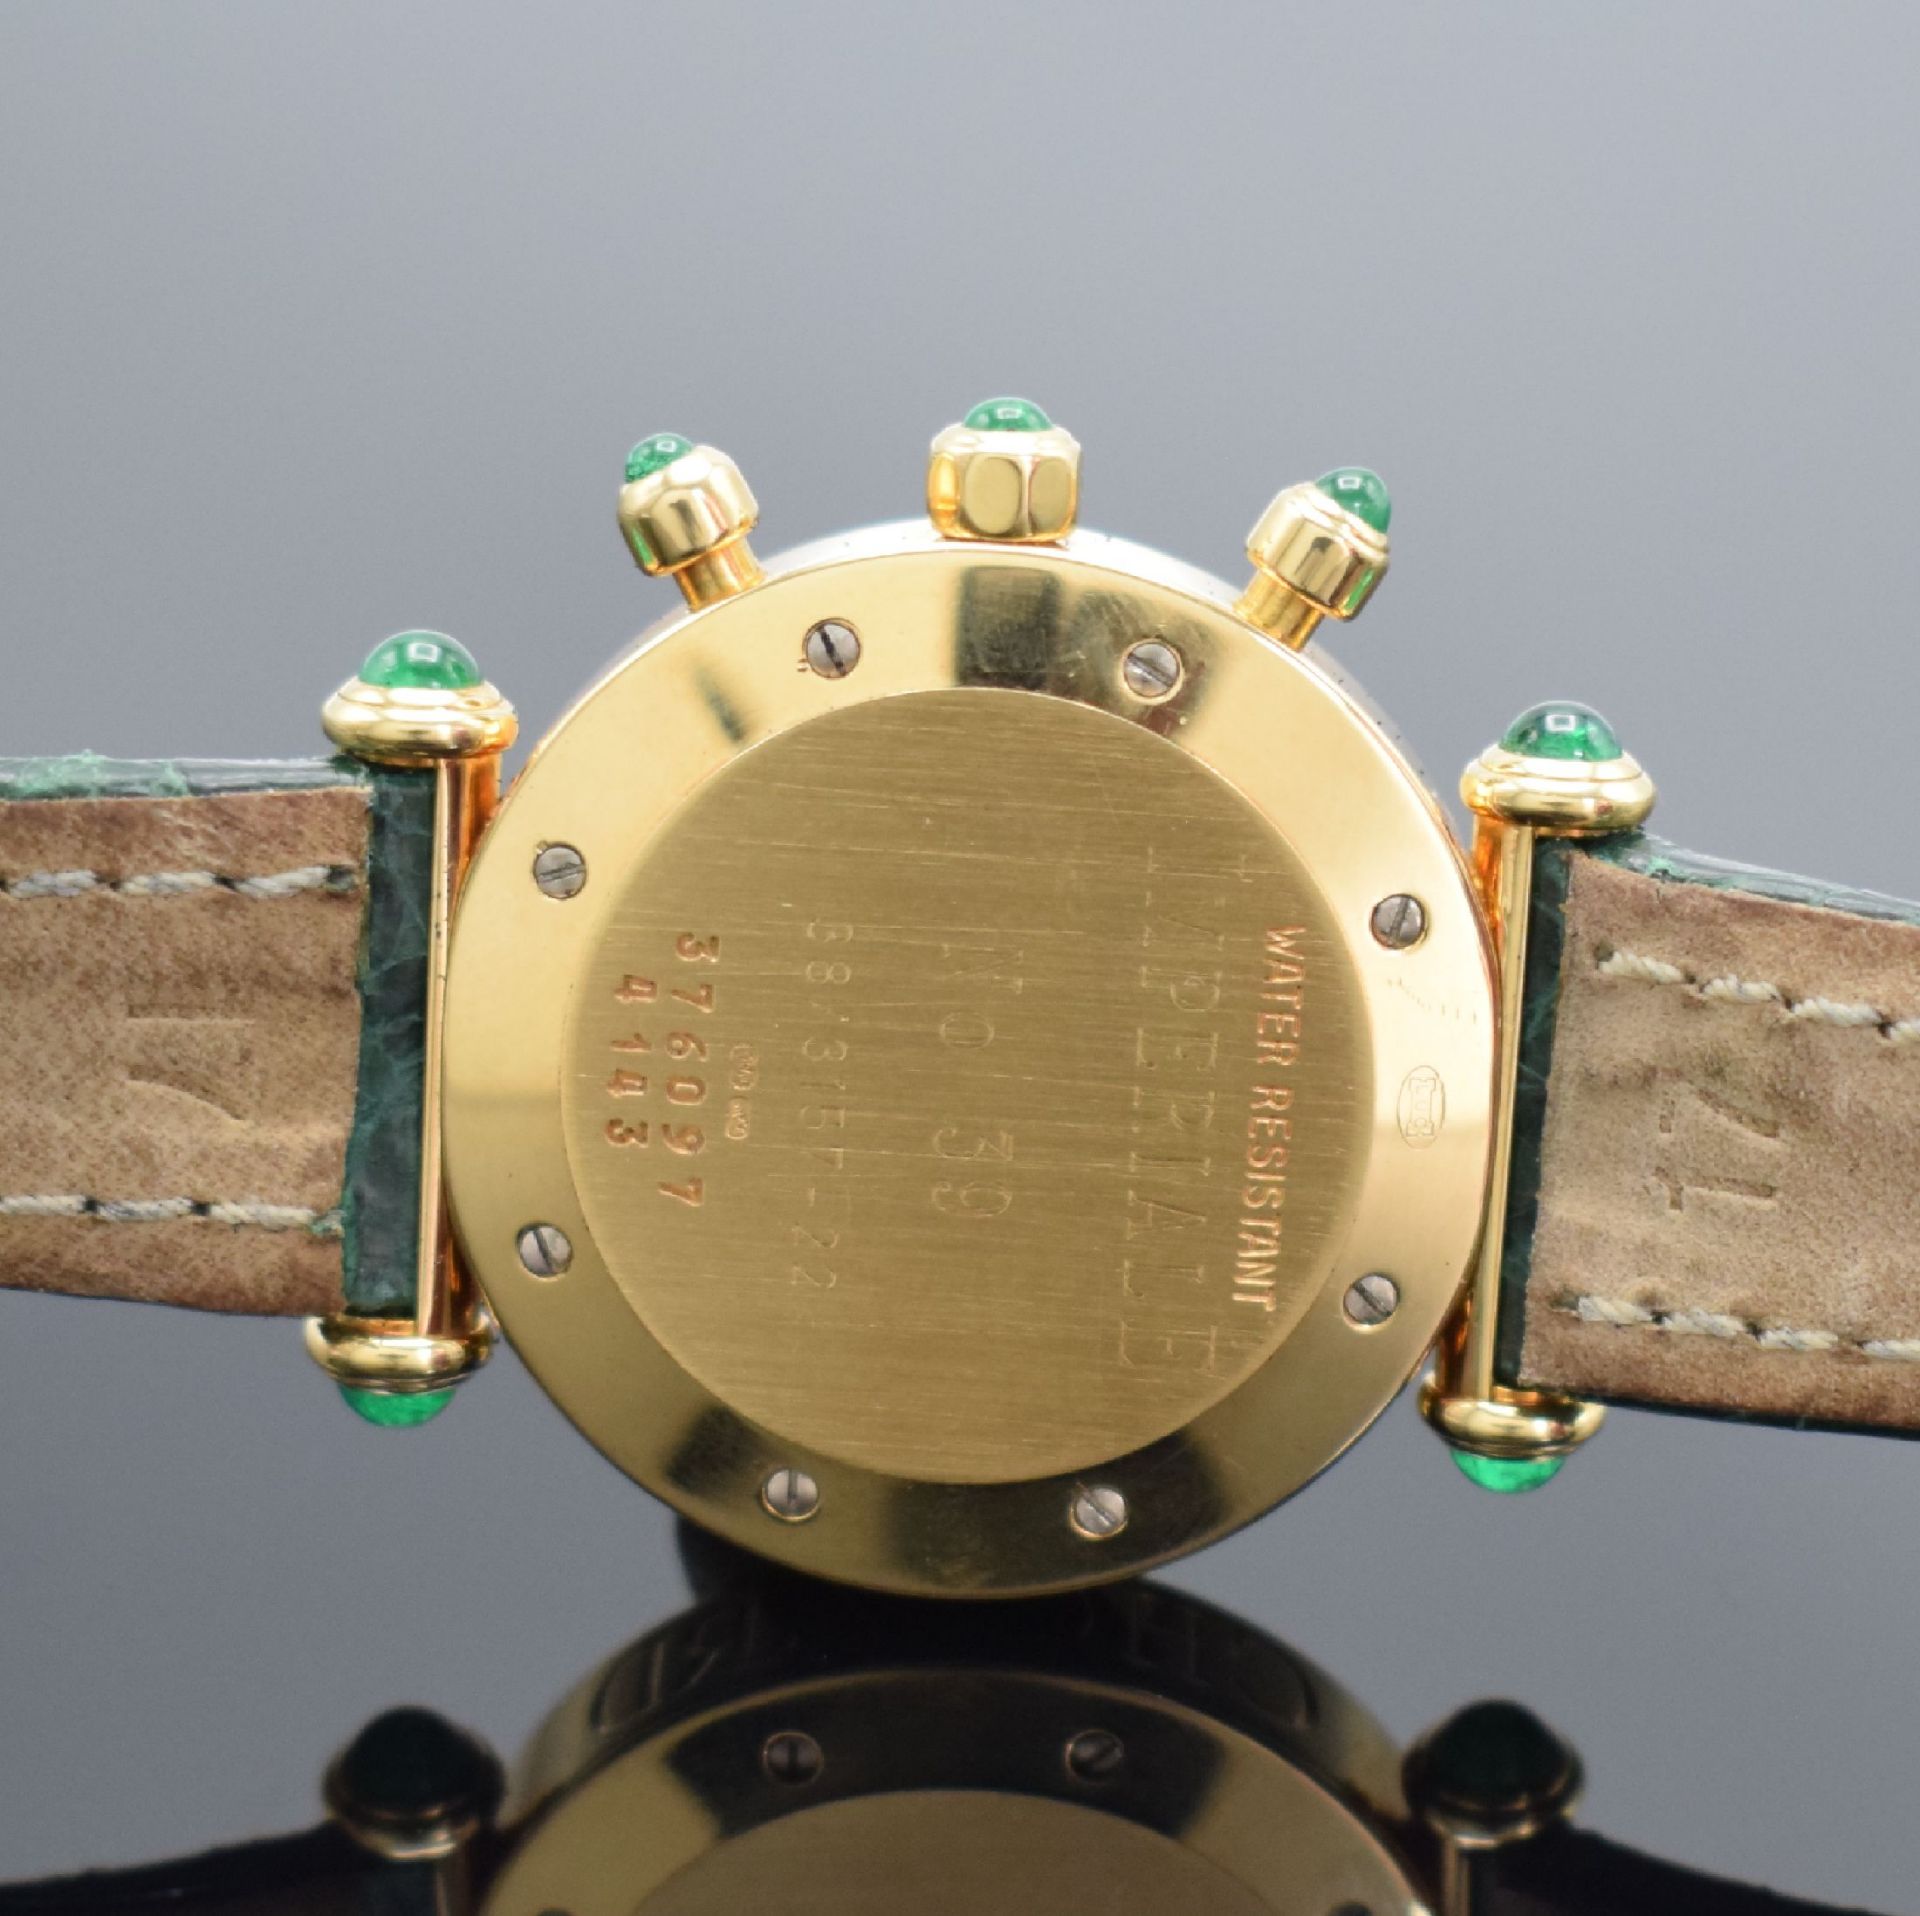 CHOPARD Imperiale Damenarmbanduhr in 750/000 GG Referenz - Image 6 of 7